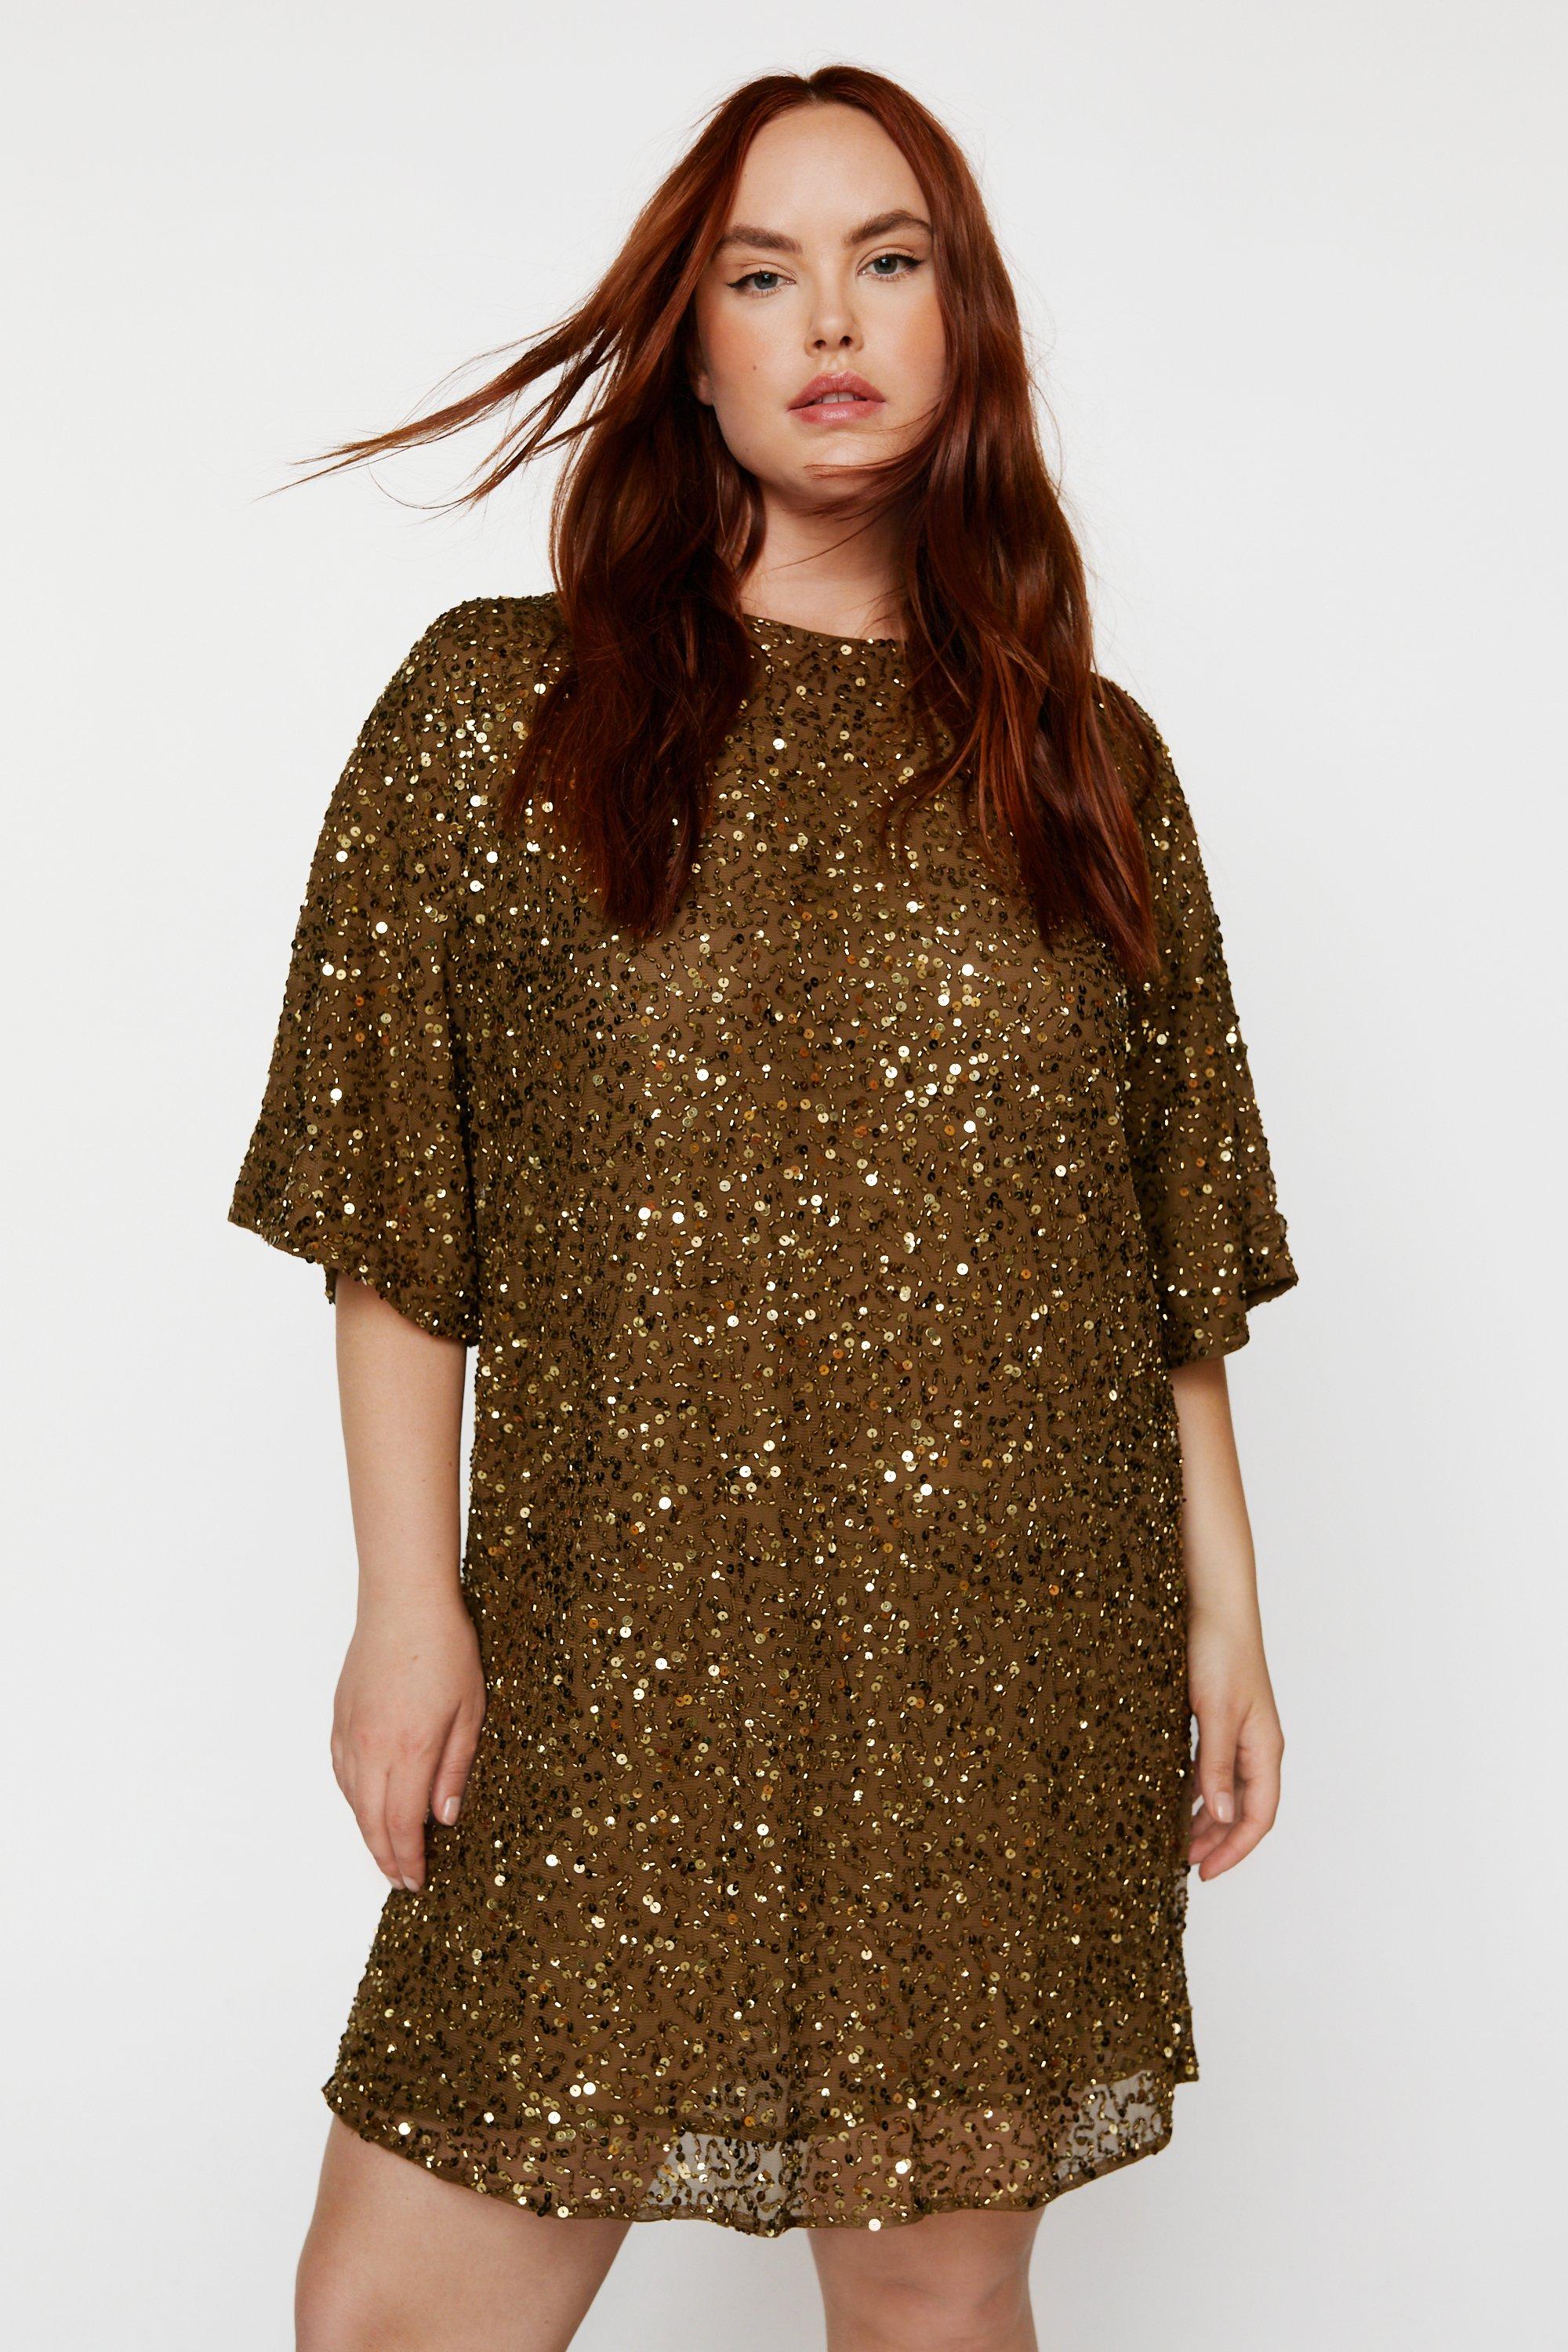 Gold Sequin Dress - Gold Glitter Dress - Gold Skater Dress - Lulus